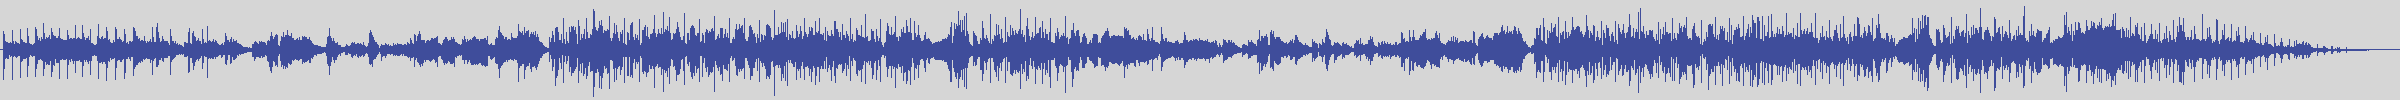 digiphonic_records [DPR003] Nino D'Angelo - Celebrità [Original Mix] audio wave form